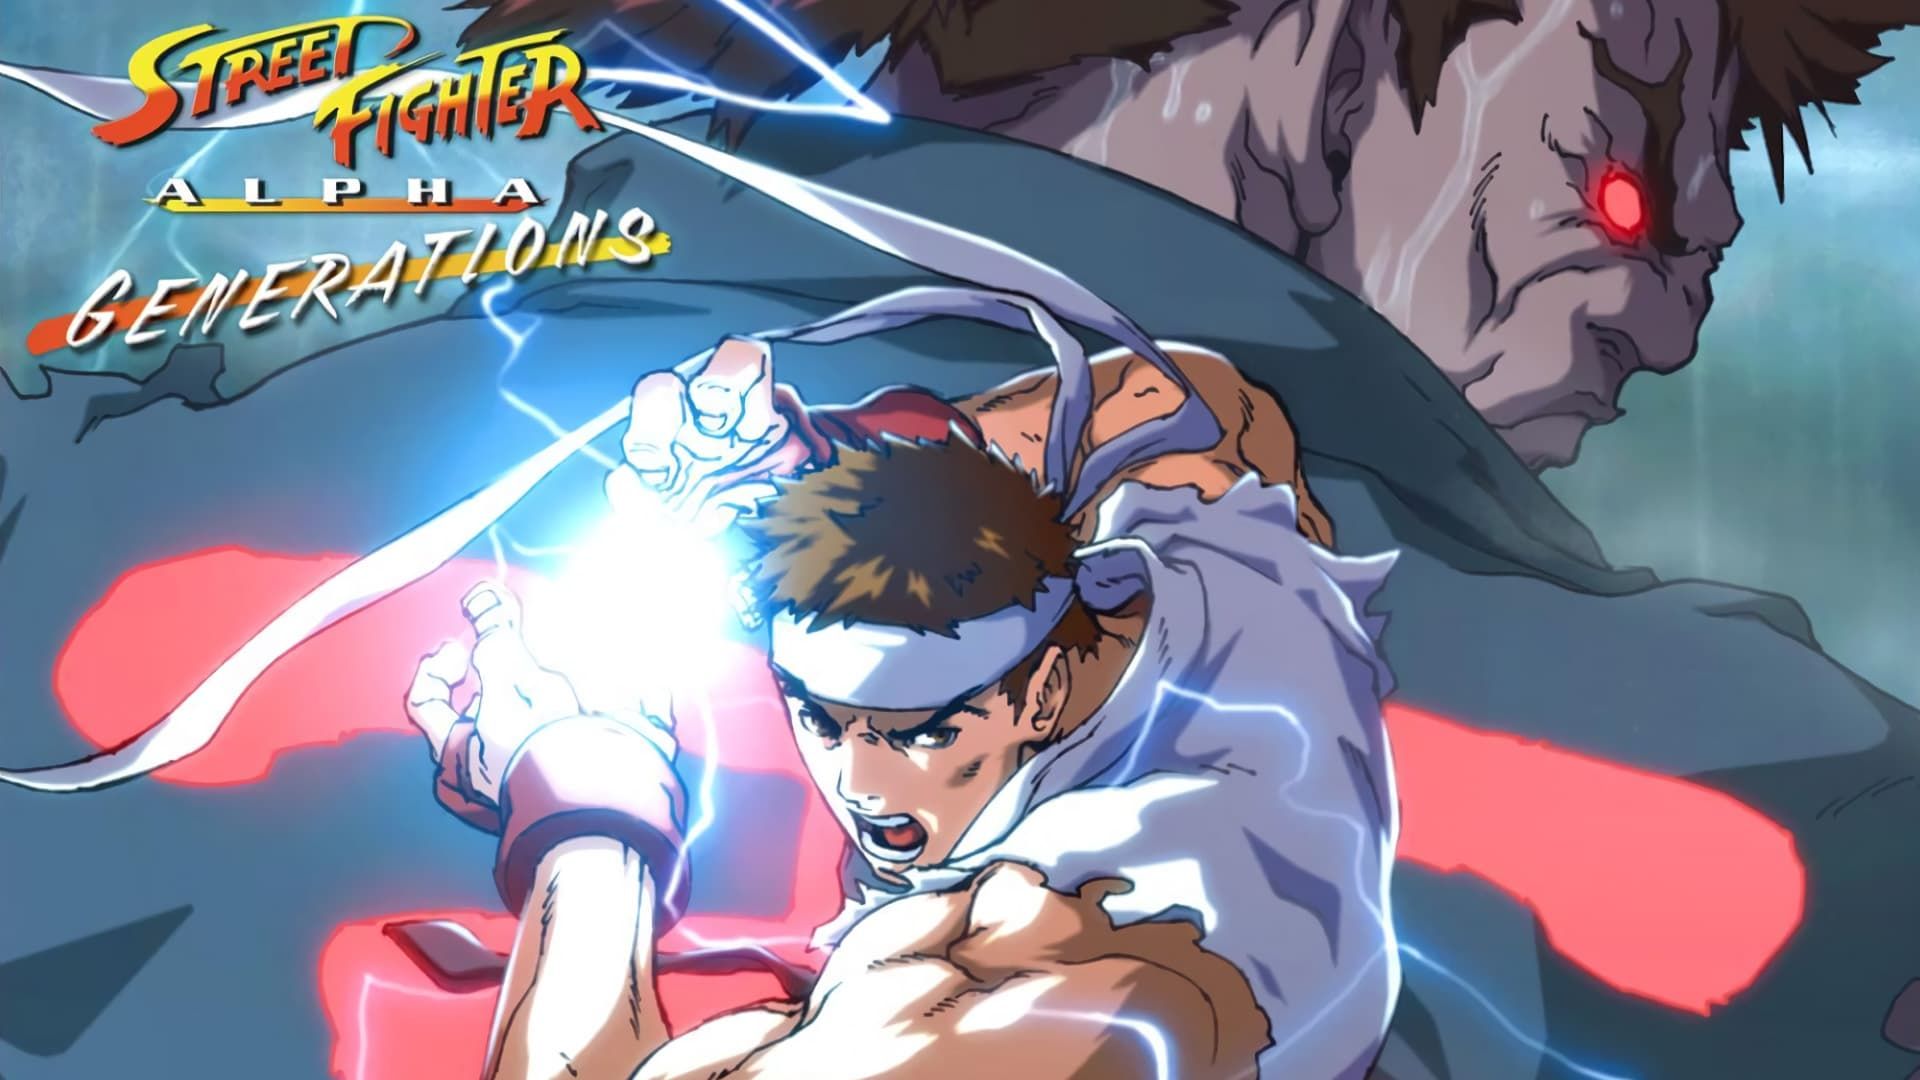 Street Fighter Alpha: Generations background